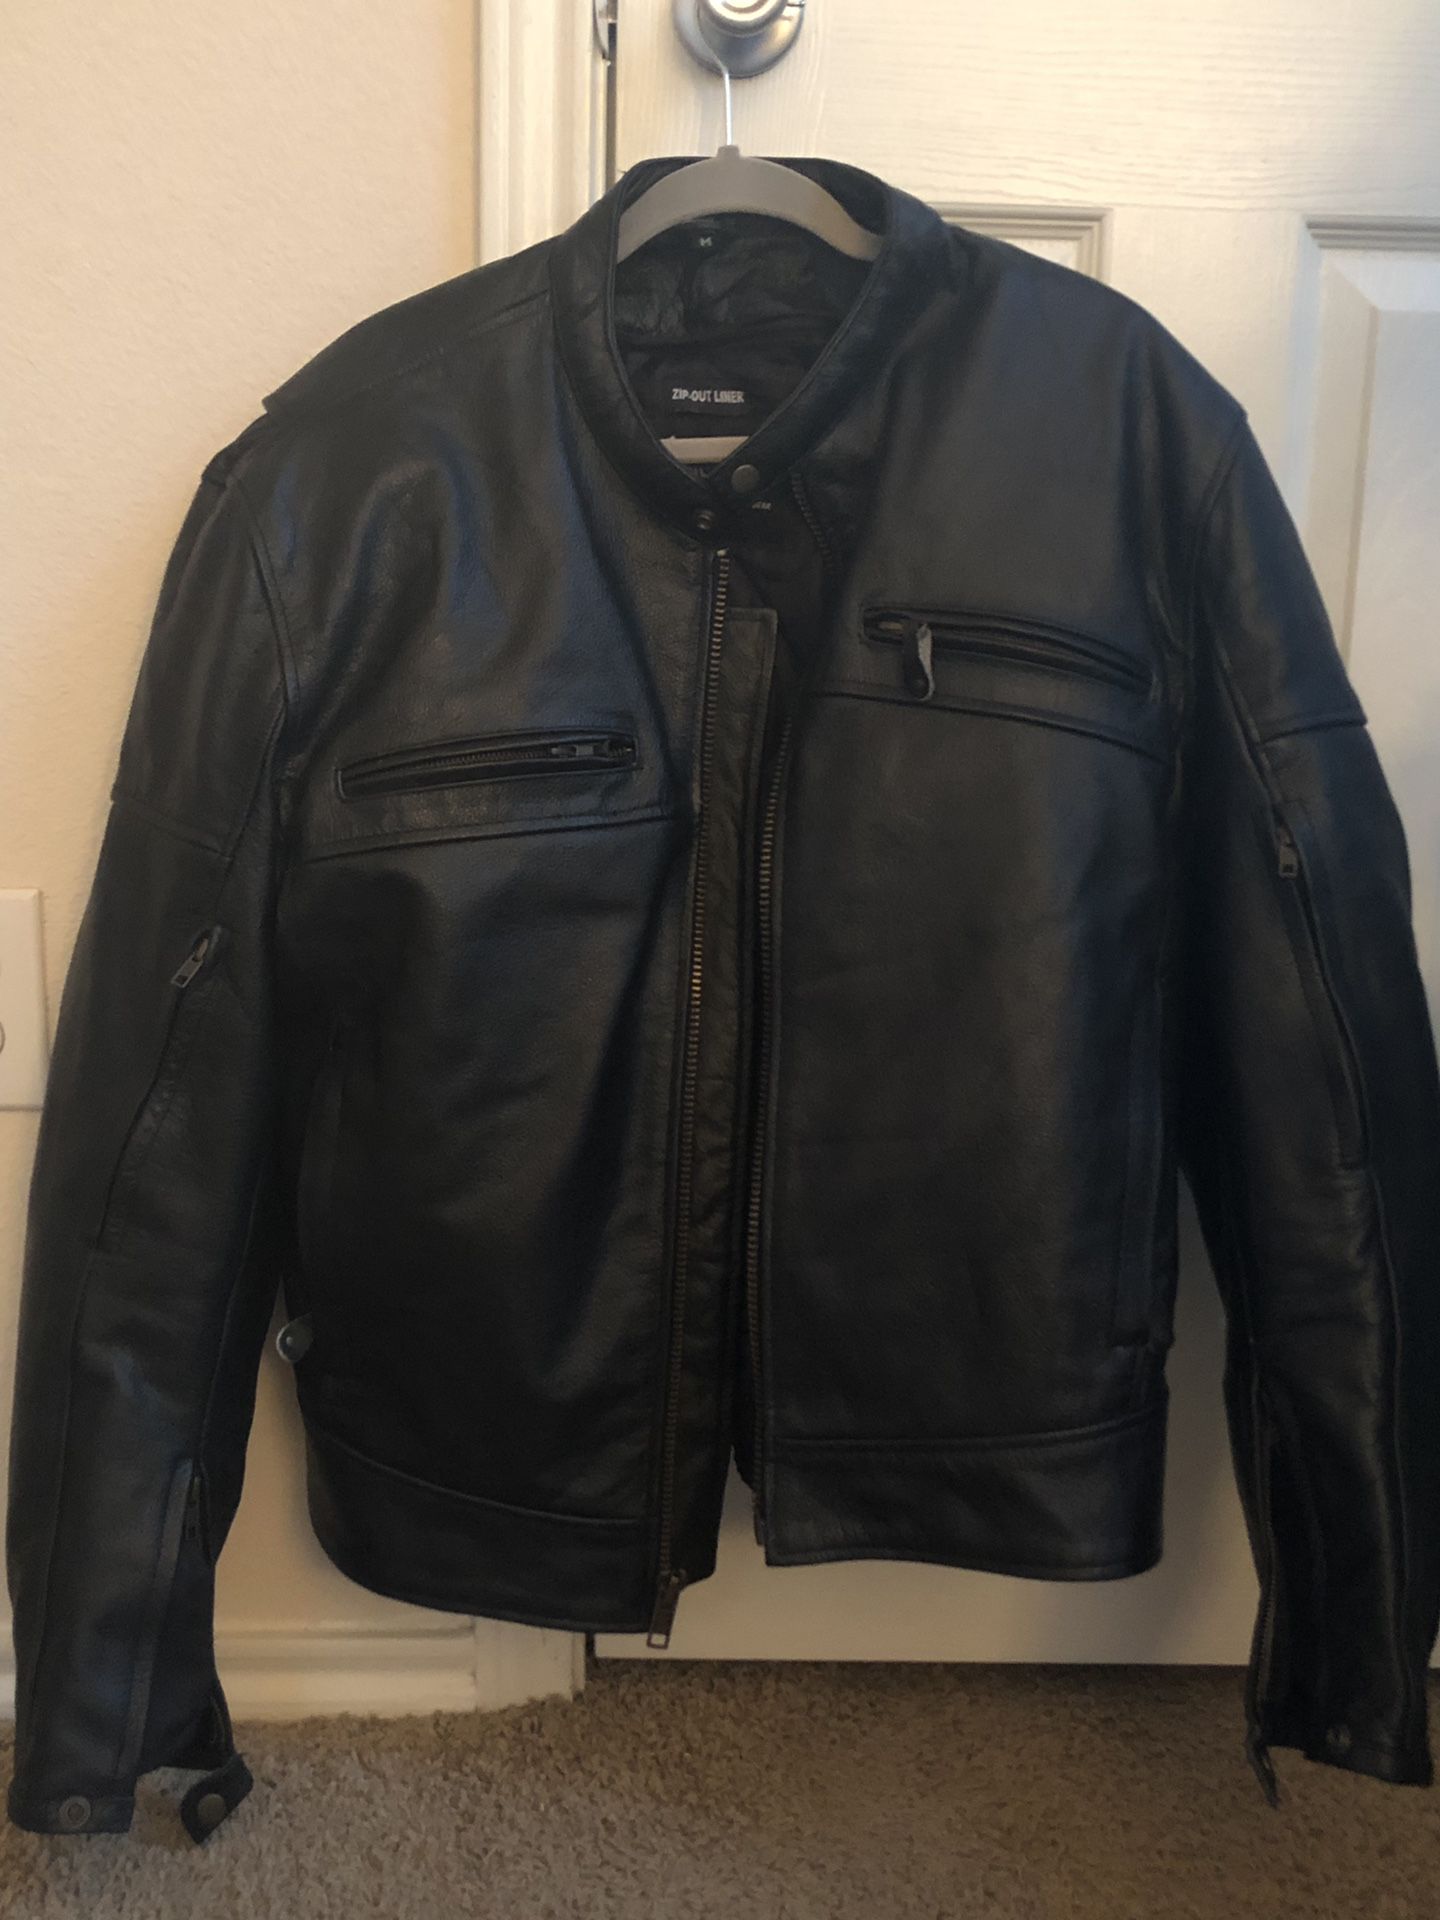 Xelement motorcycle jacket